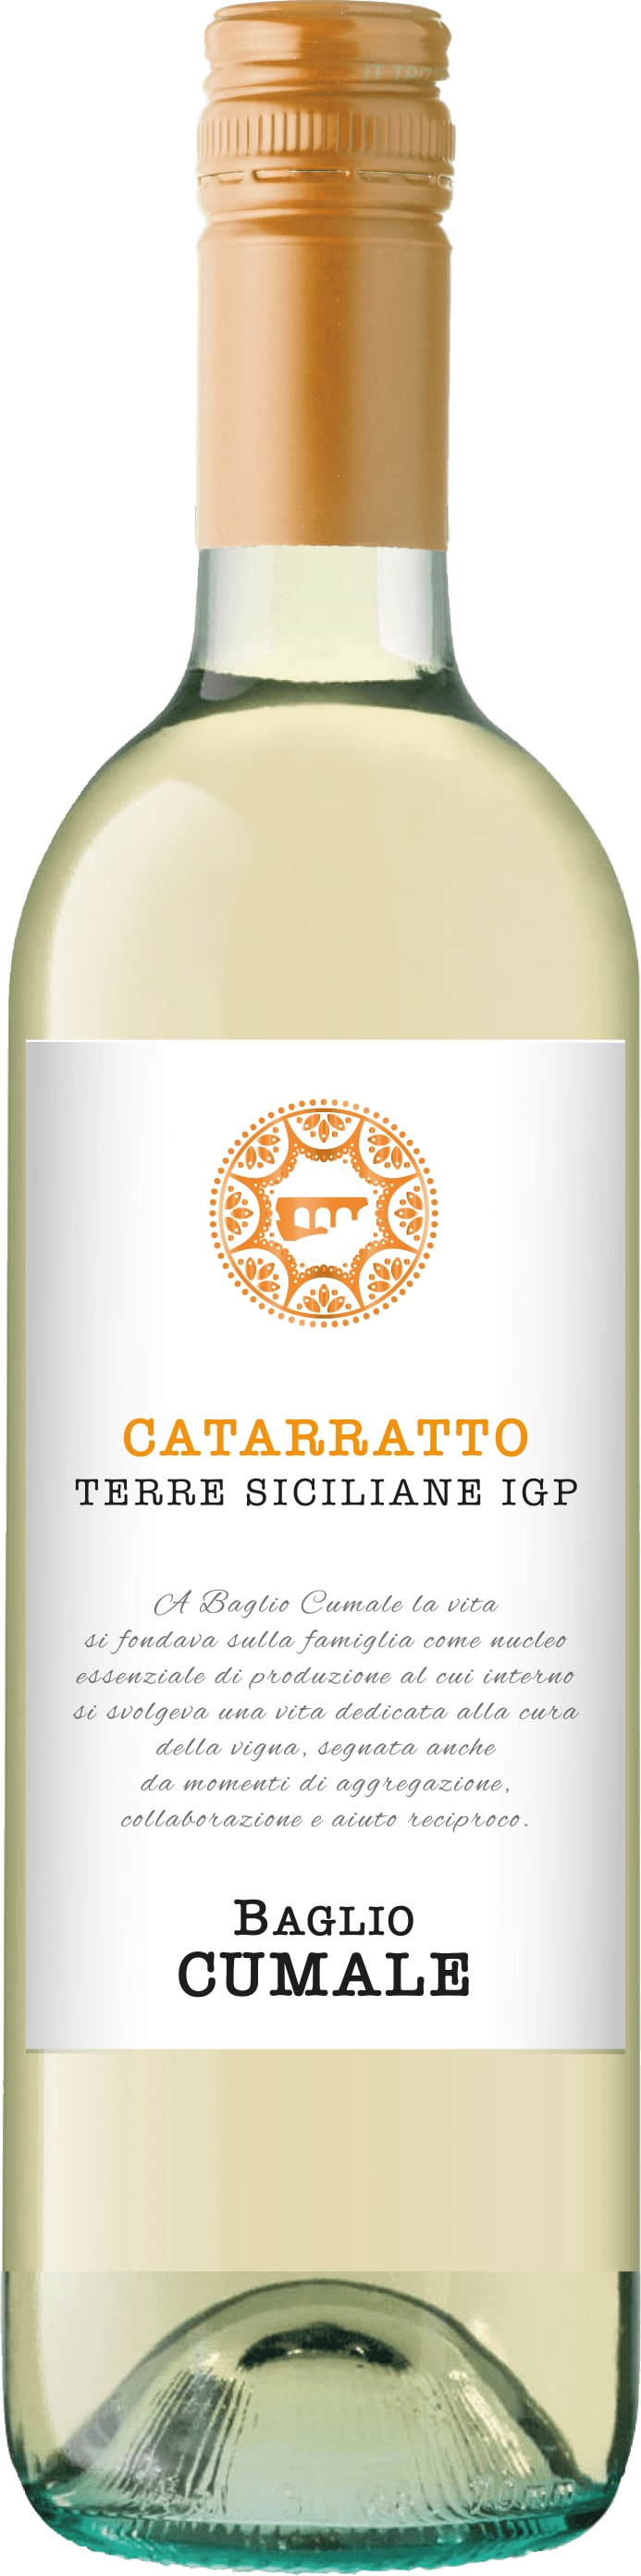 Baglio Cumale Catarratto 75cl - Buy Baglio Cumale Wines from GREAT WINES DIRECT wine shop